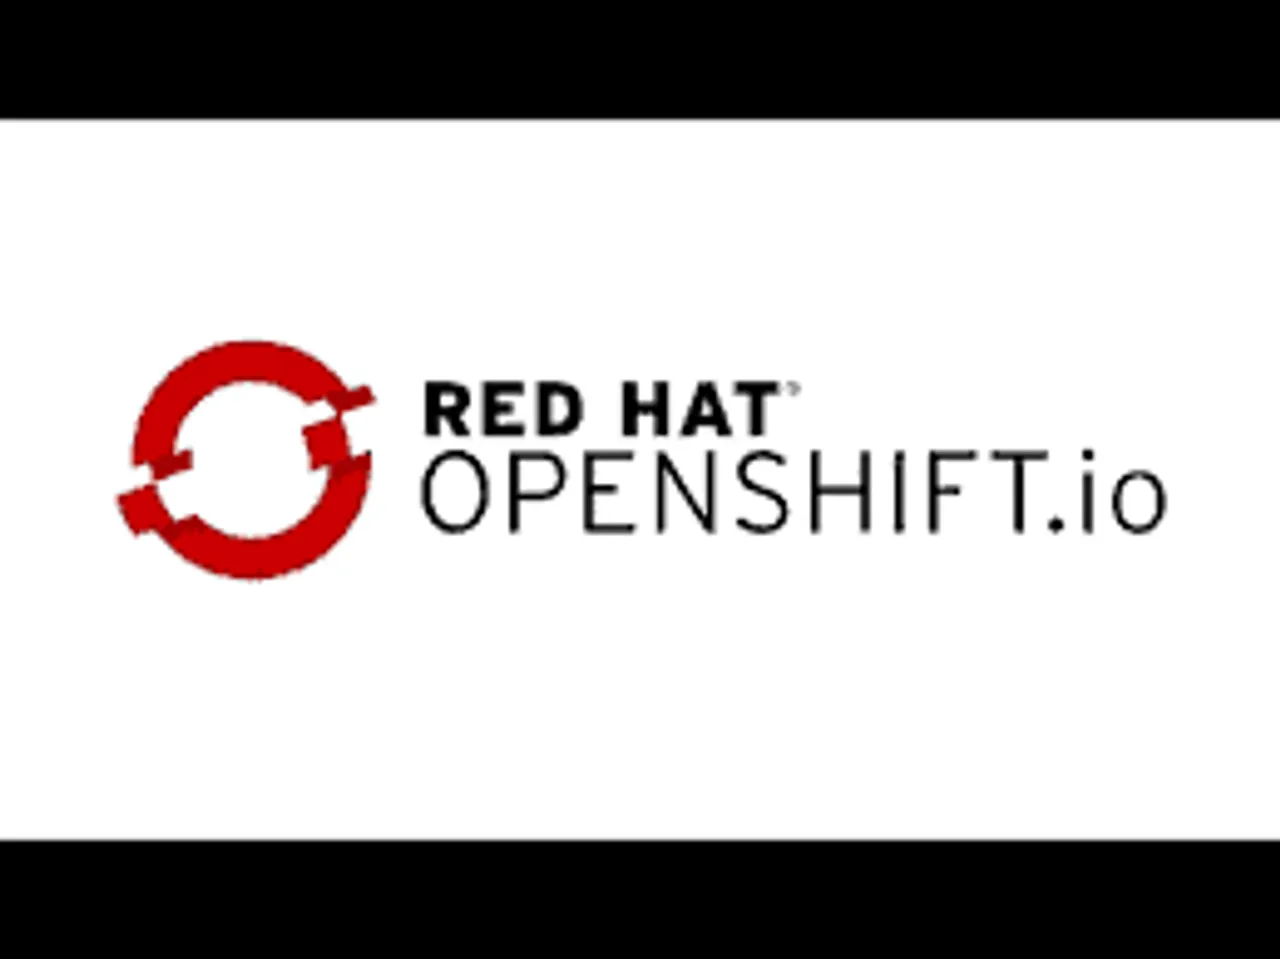 OpenShift.io